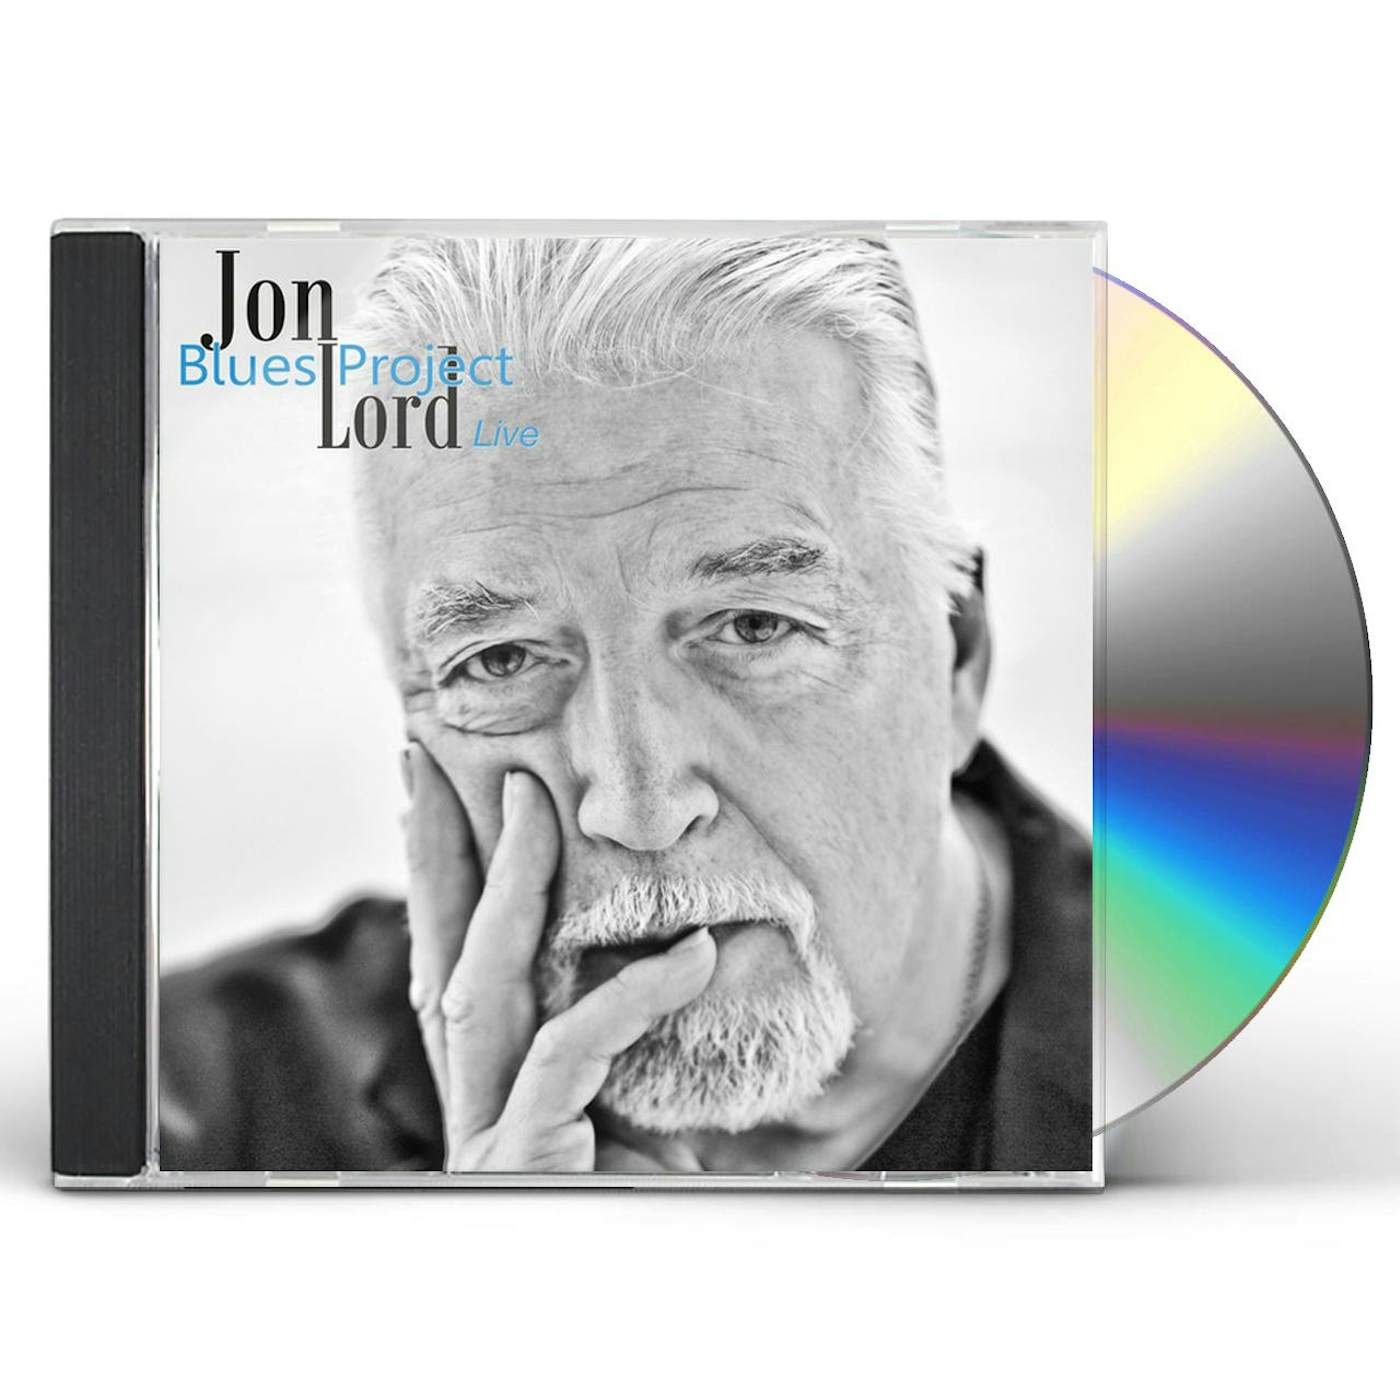 Jon Lord BLUES PROJECT LIVE CD